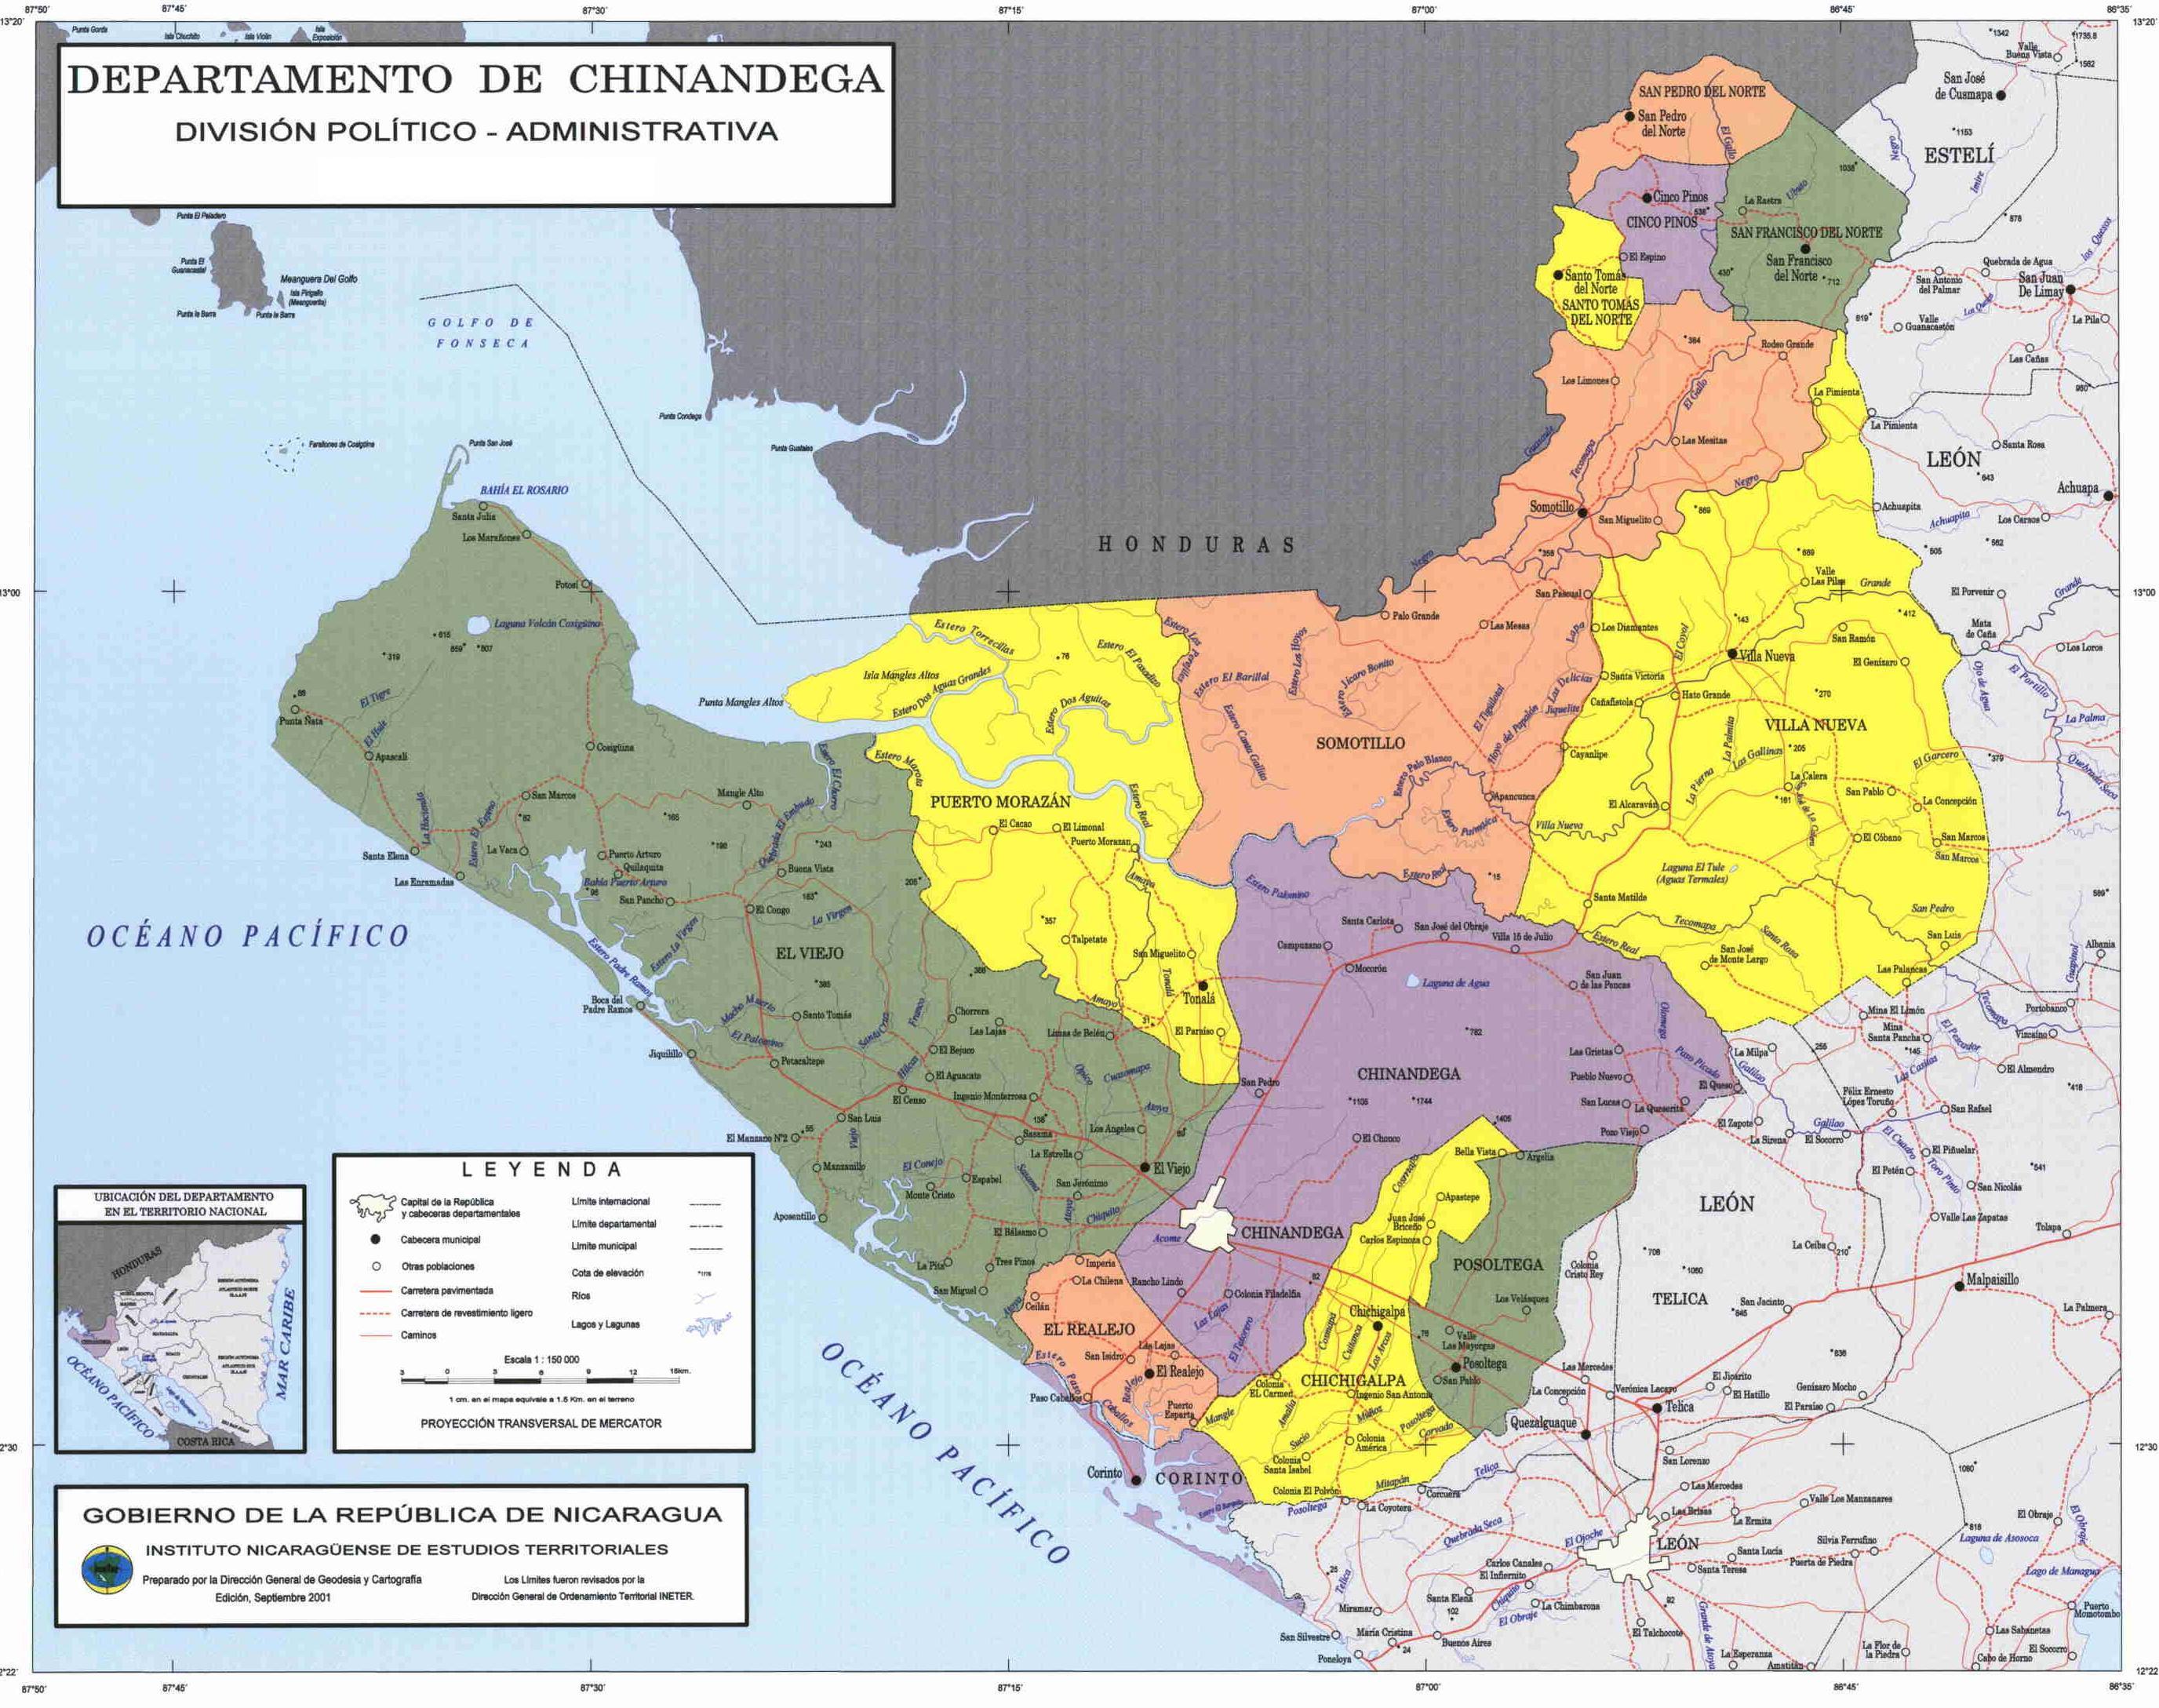 Chinandega Department Administrative Political Map, Nicaragua